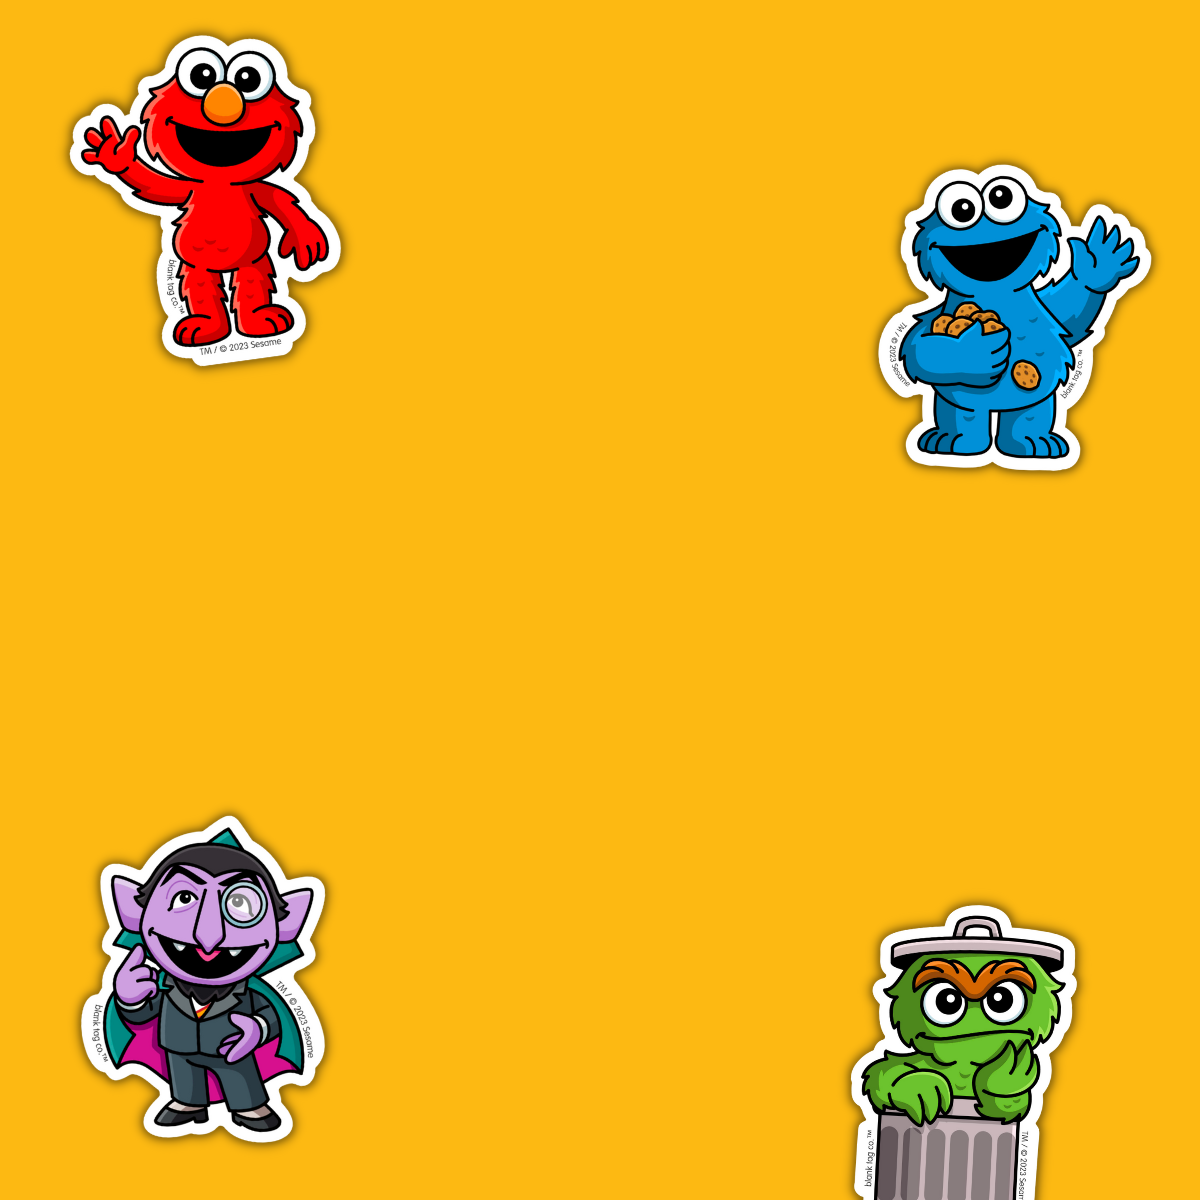 Sesame Street Stickers